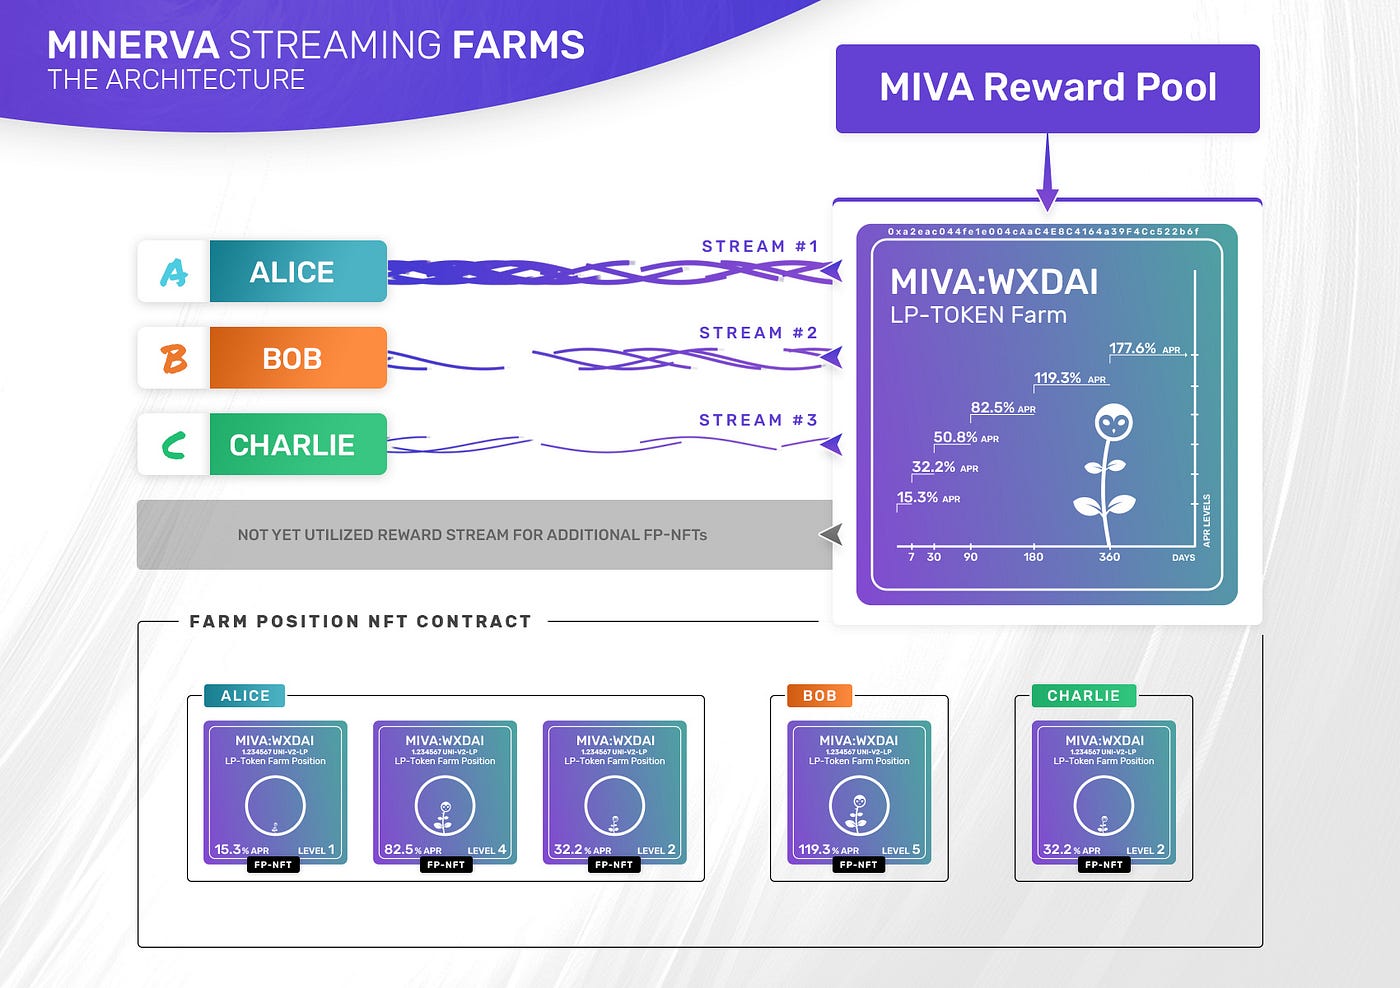 LP-Token Farm Architecture, e.g. MIVA:WXDAI with MIVA reward stream